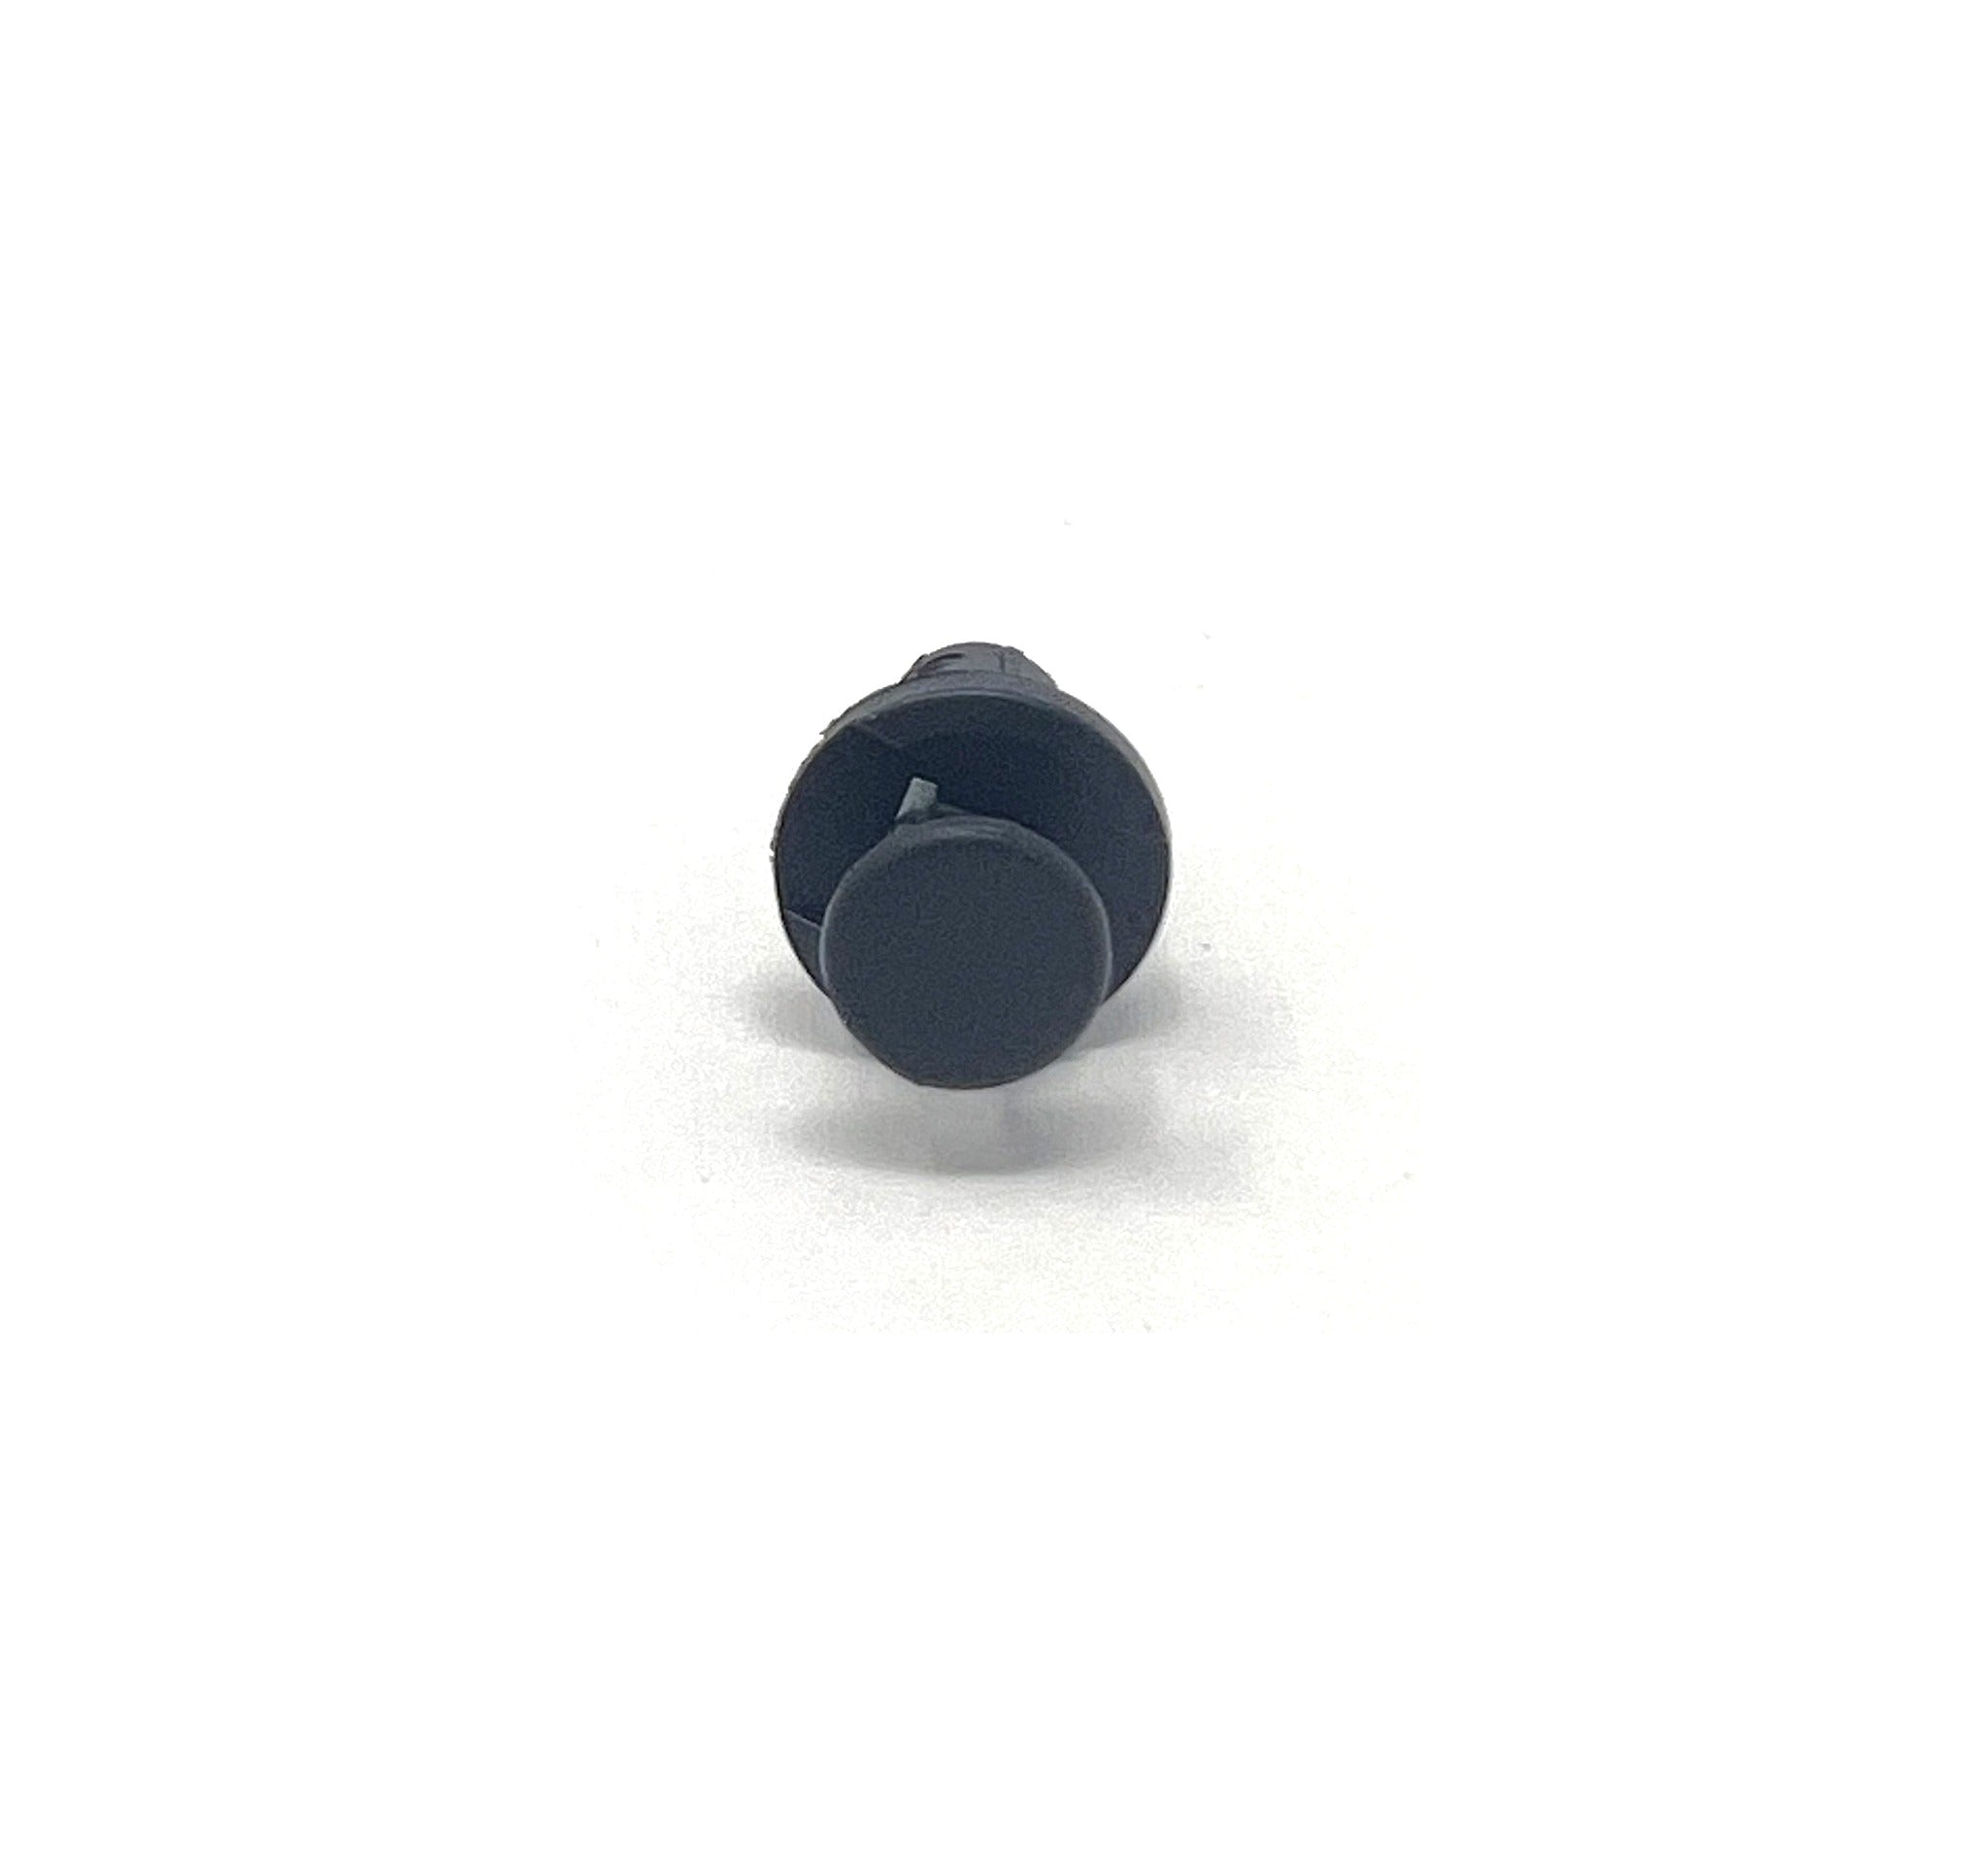 Black Nylon Rocker Panel Retainer Head Diameter 15mm, Stem Length 20mm, Fits Into 8mm Hole (Pack of 25)